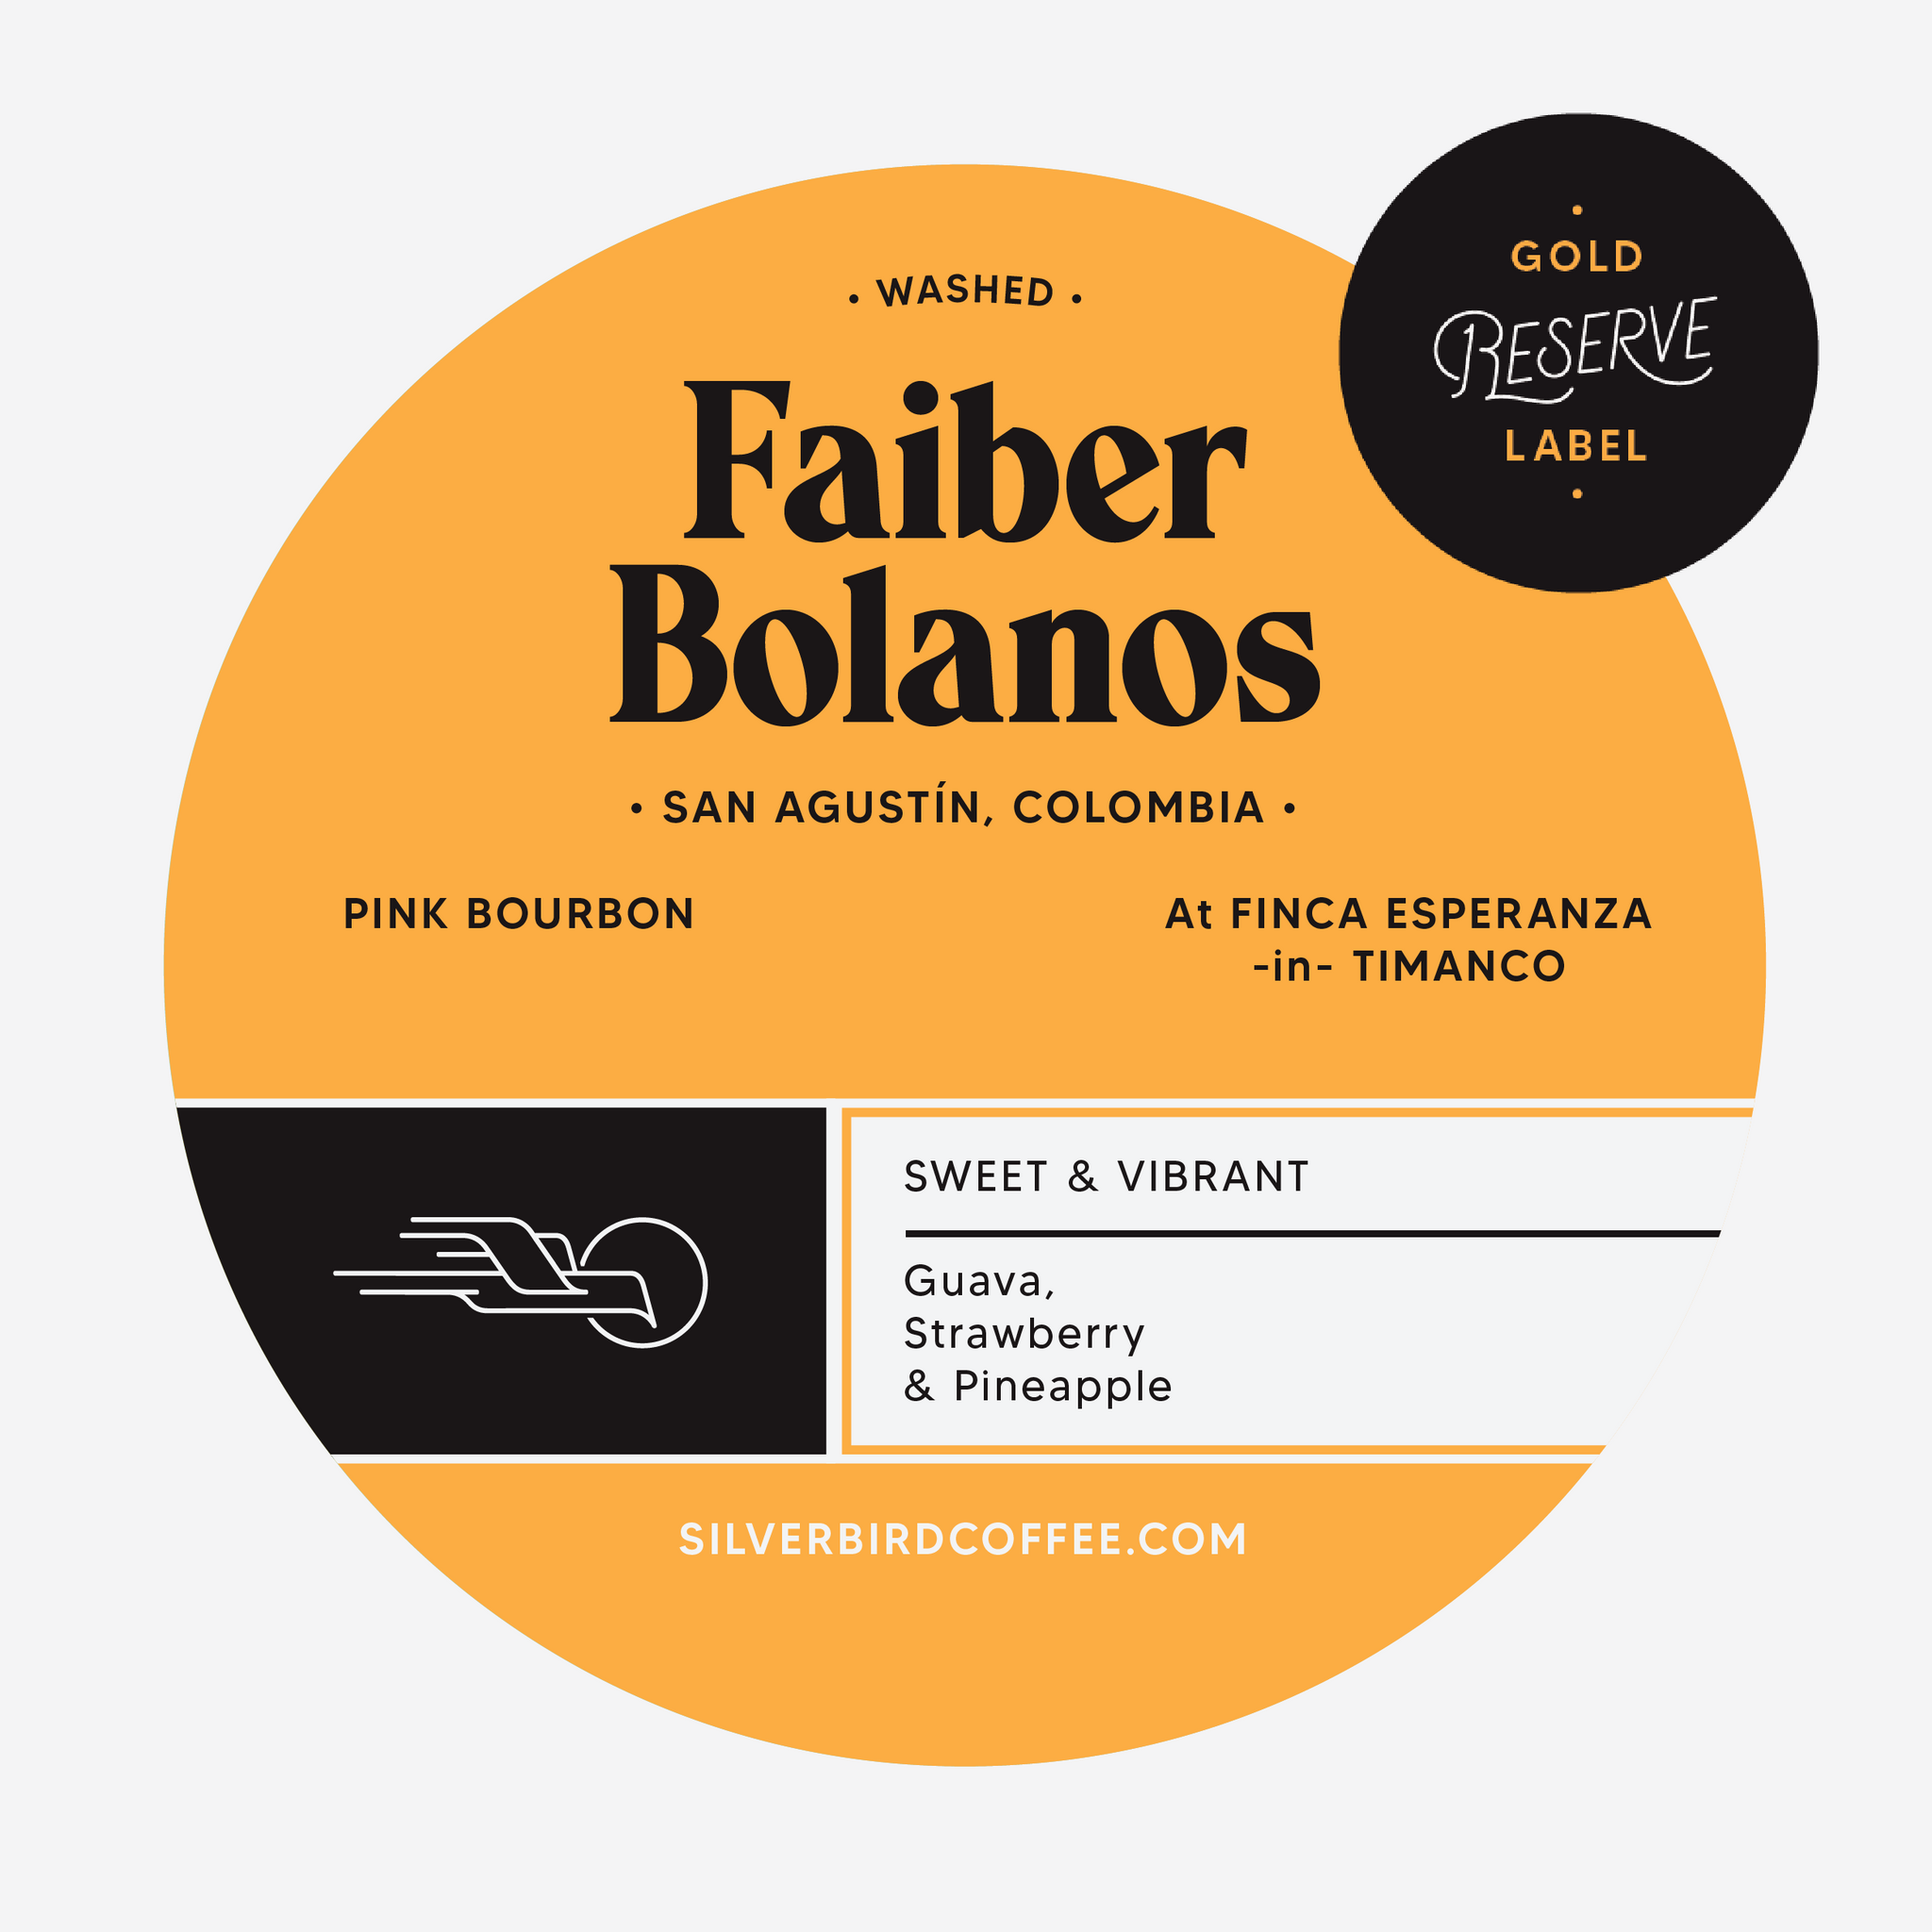 GOLD LABEL RESERVE Faiber Bolanos - Colombia